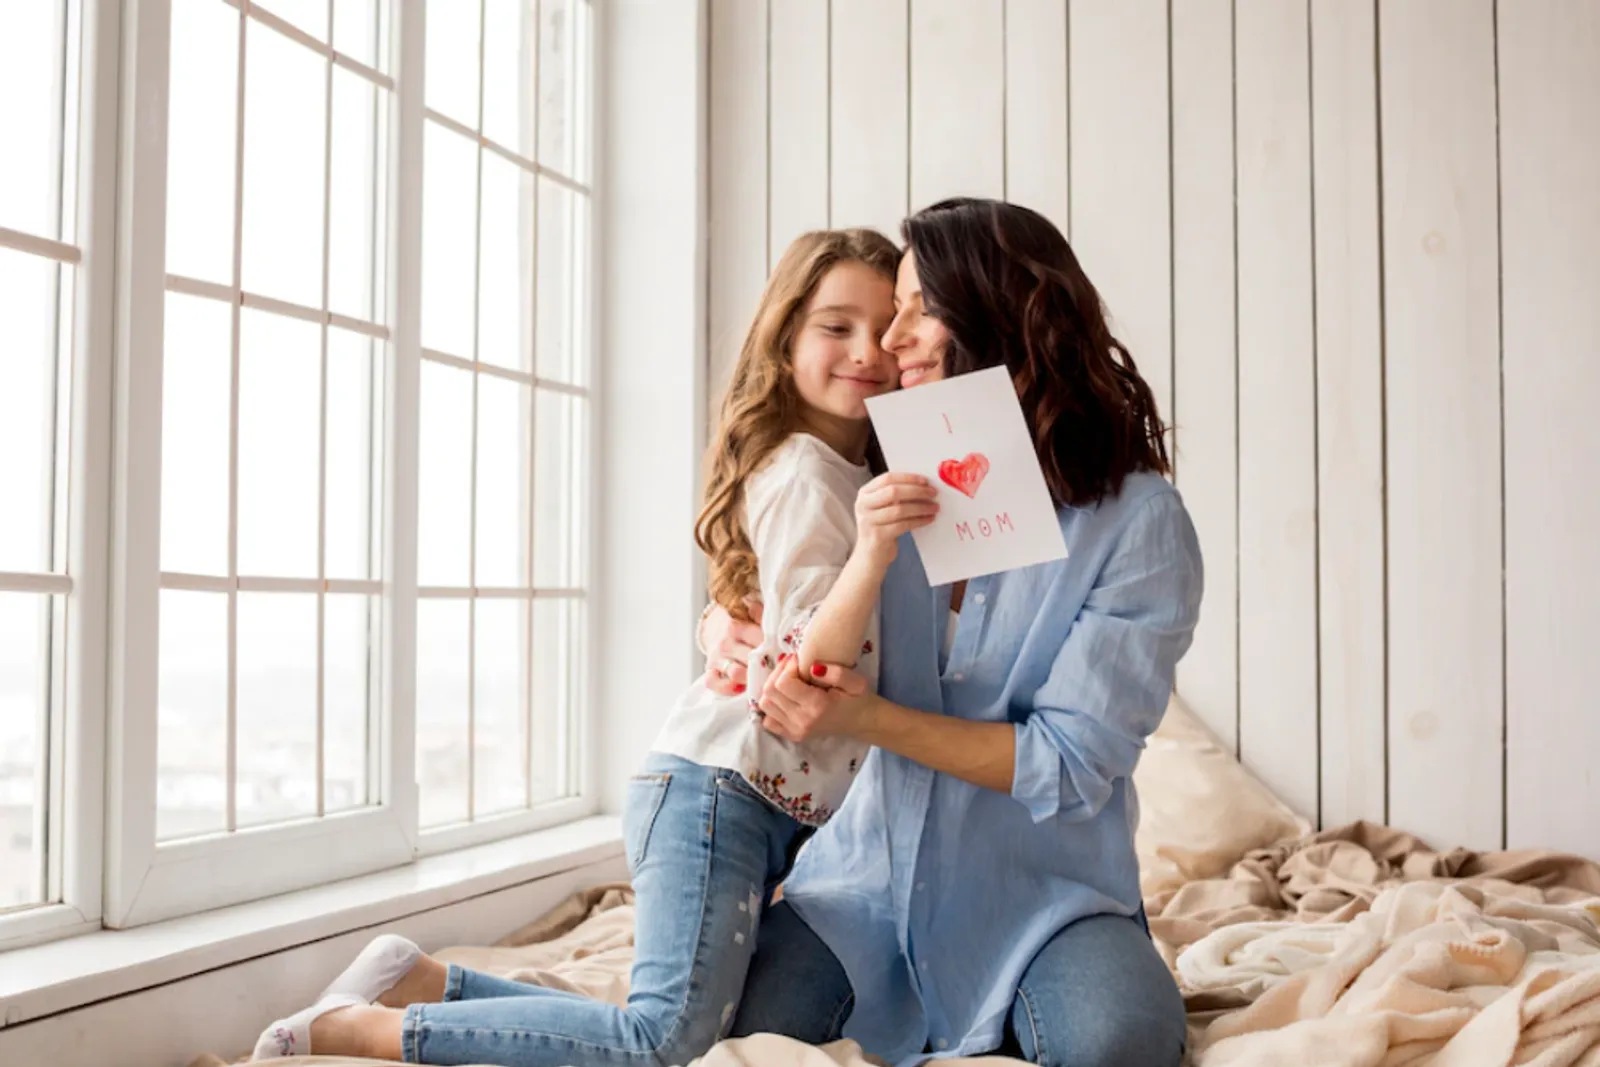 15 Contoh Kartu Ucapan Selamat Hari Ibu yang Menyentuh Hati